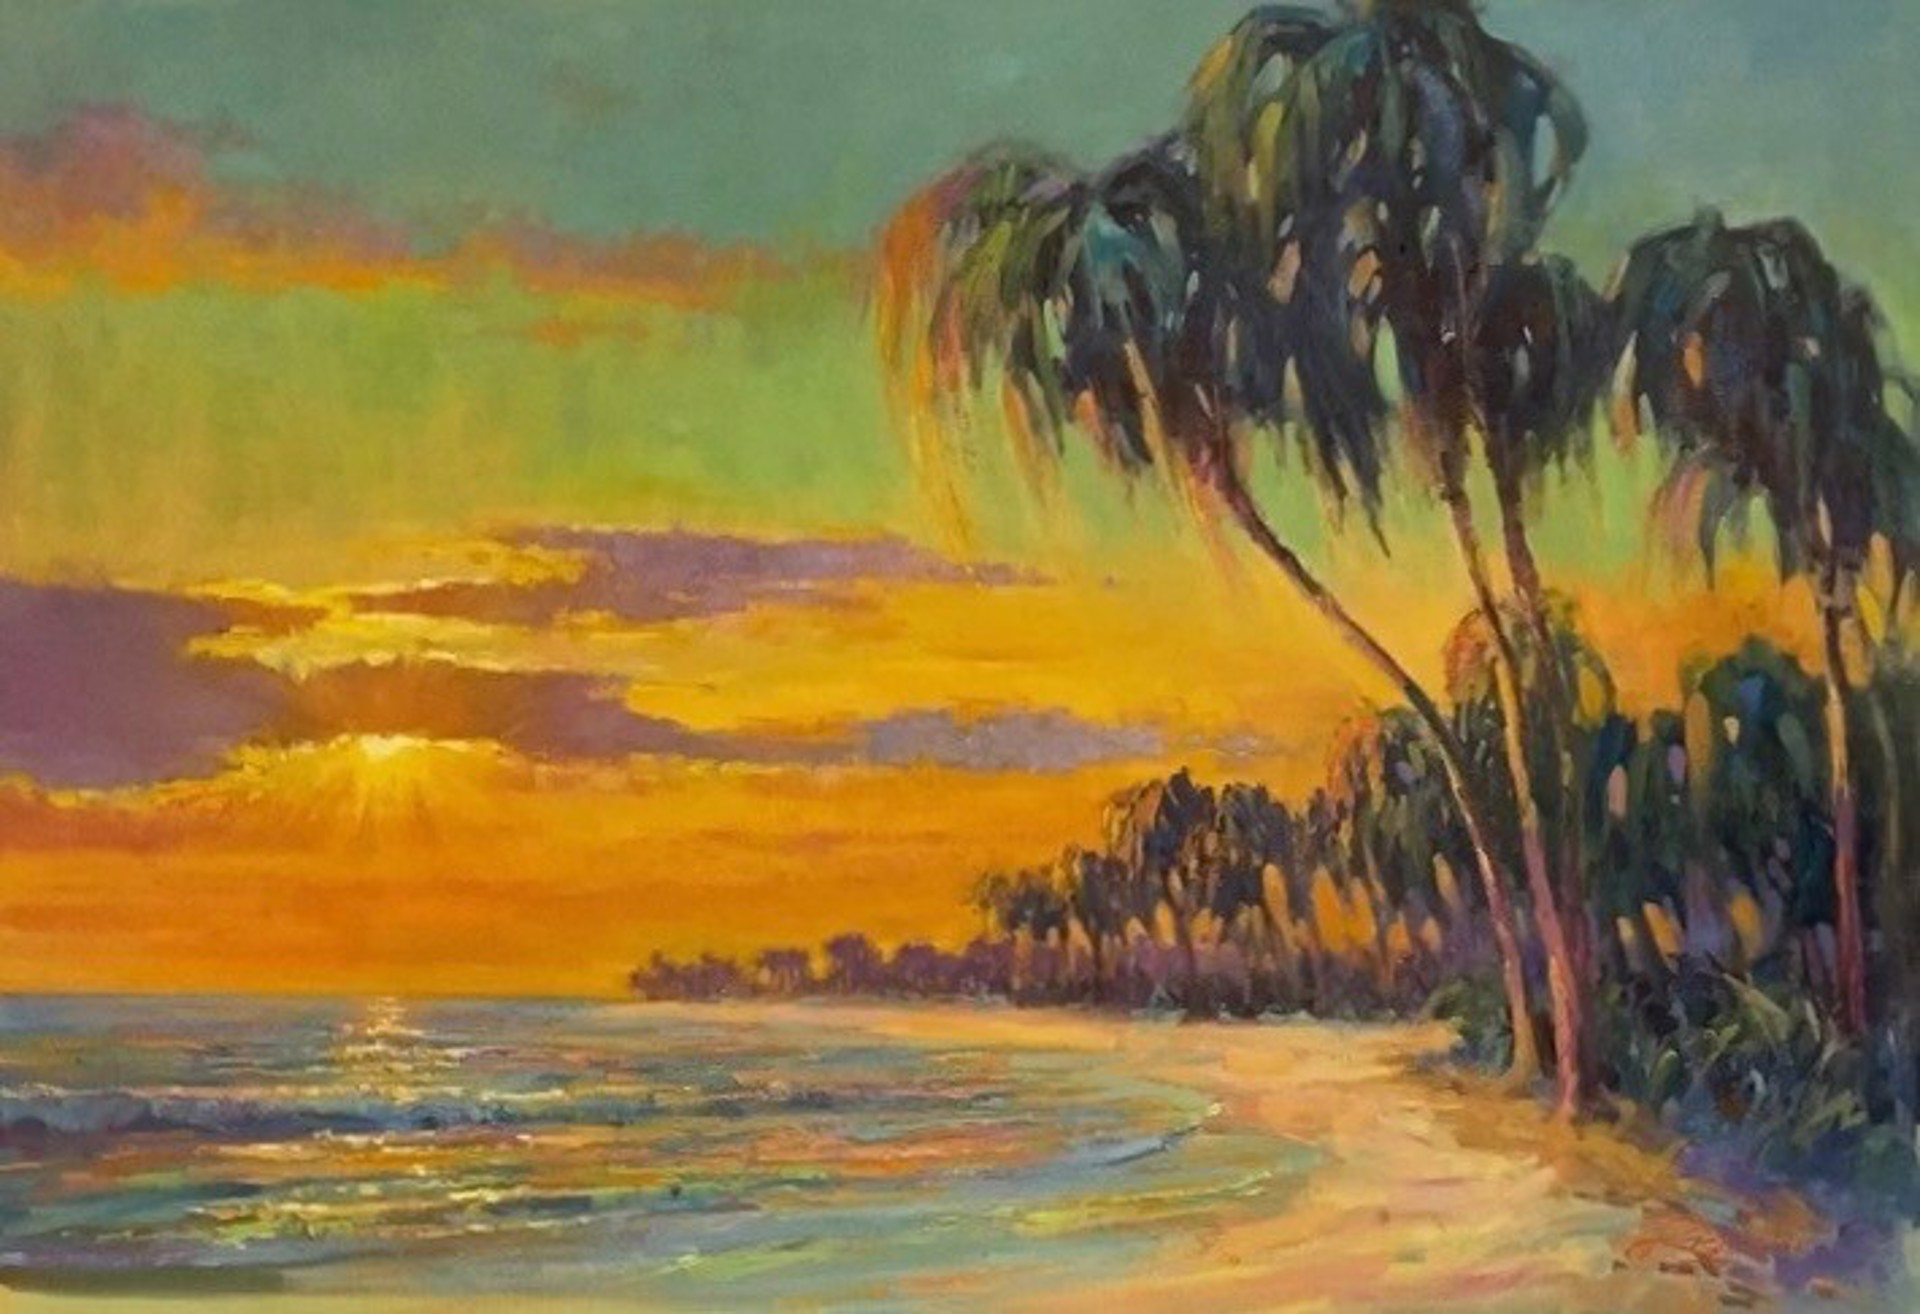 Sunset on the Palms by Linda Richichi